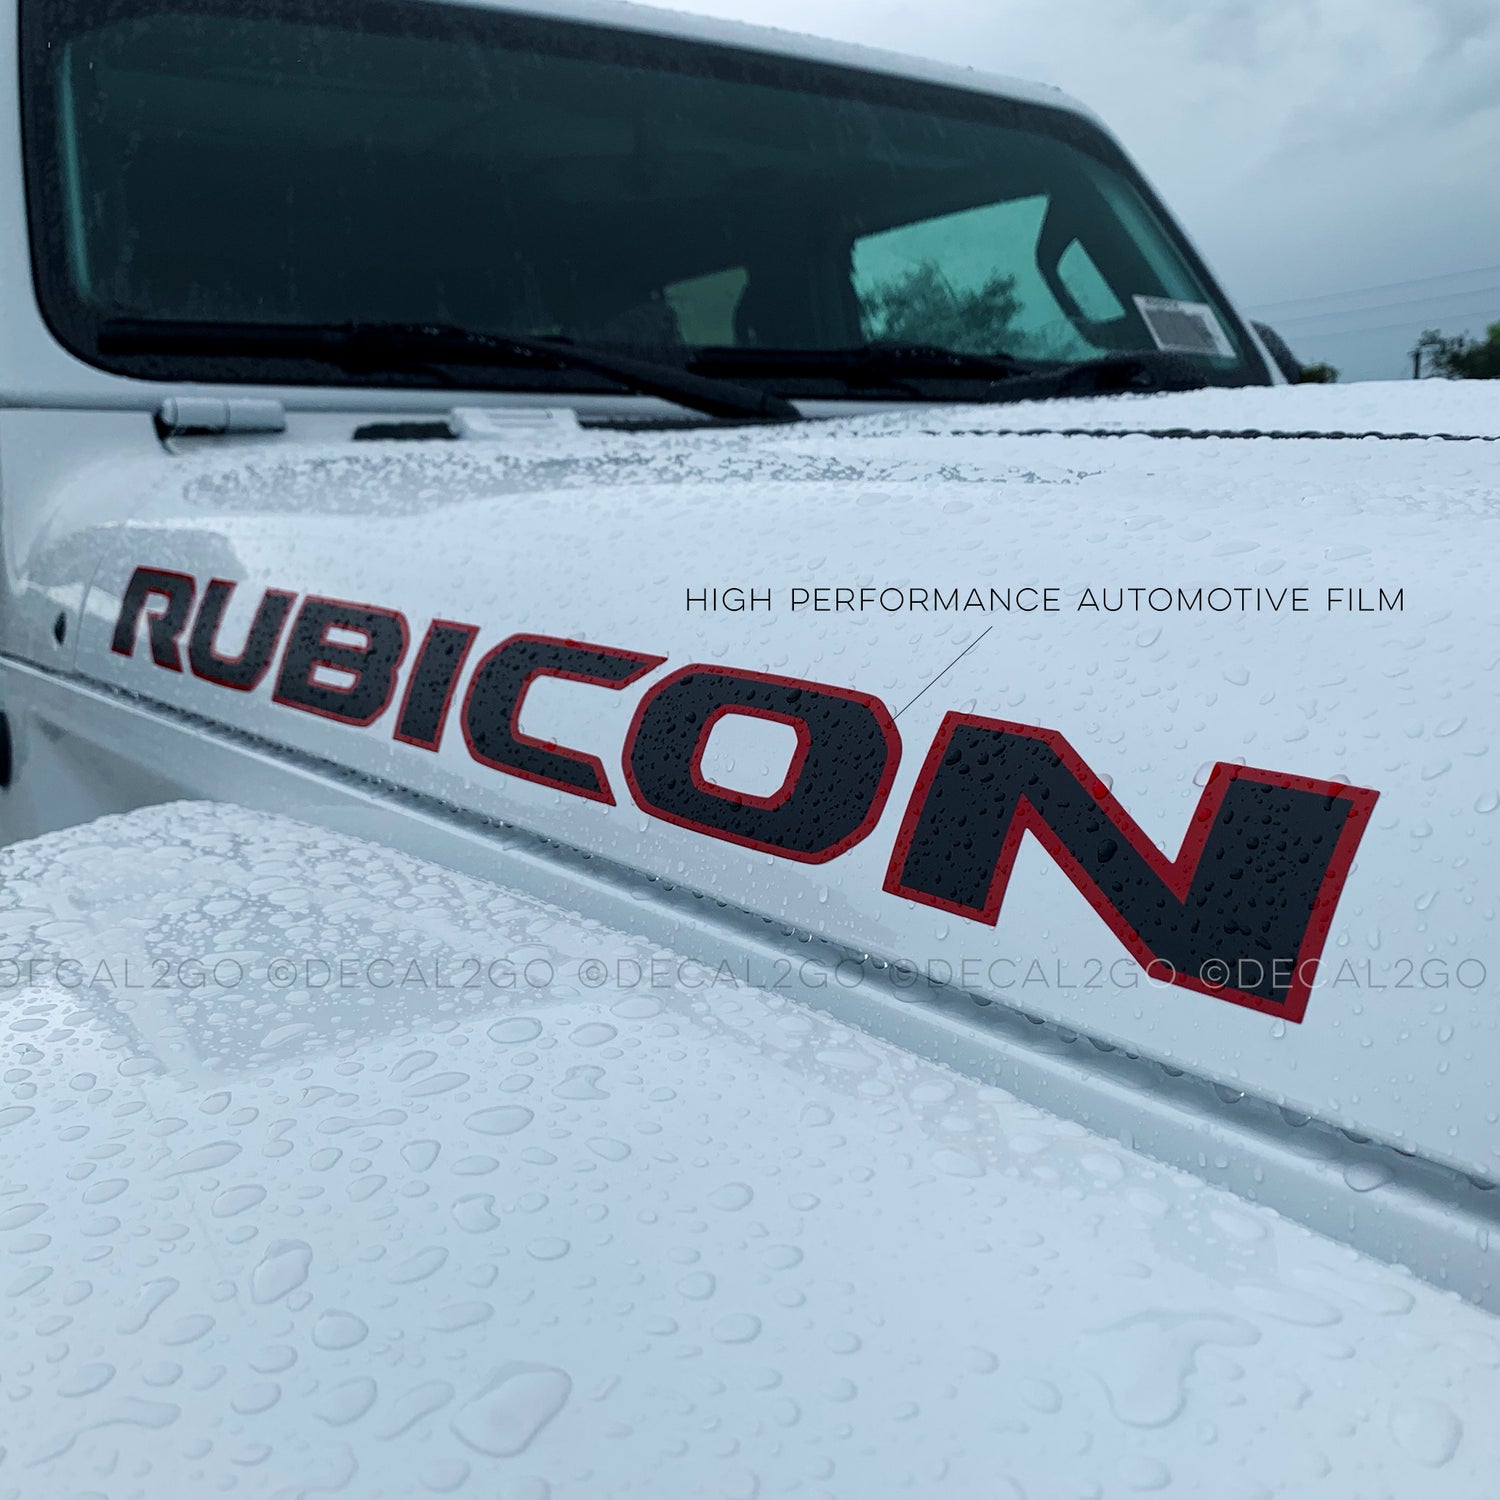 Rubicon hood decal set fits 2019-2020 Jeep Wrangler - US Rallystripes